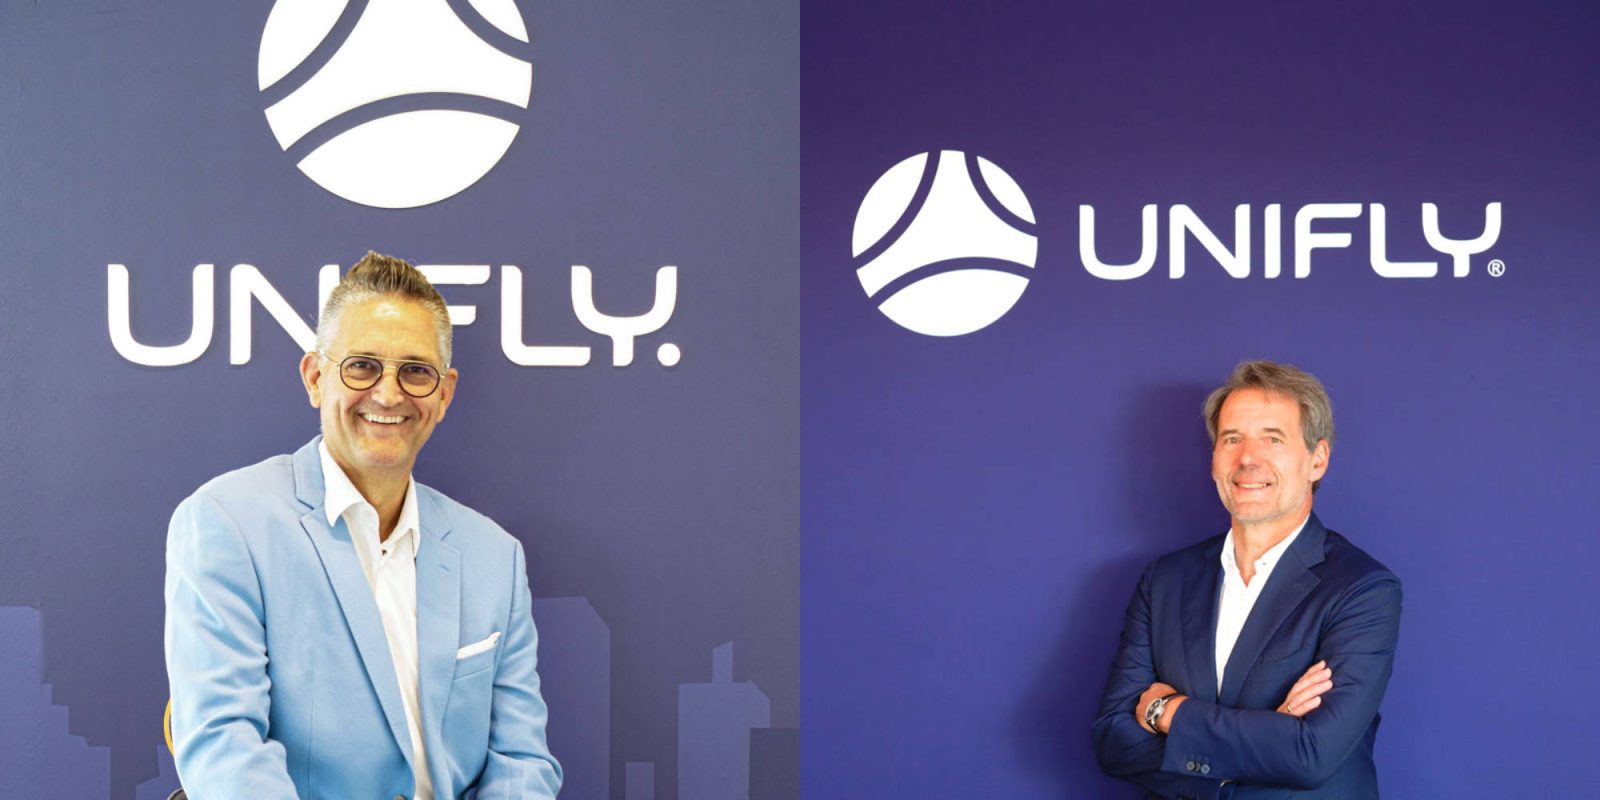 Unifly CEO UTM technology